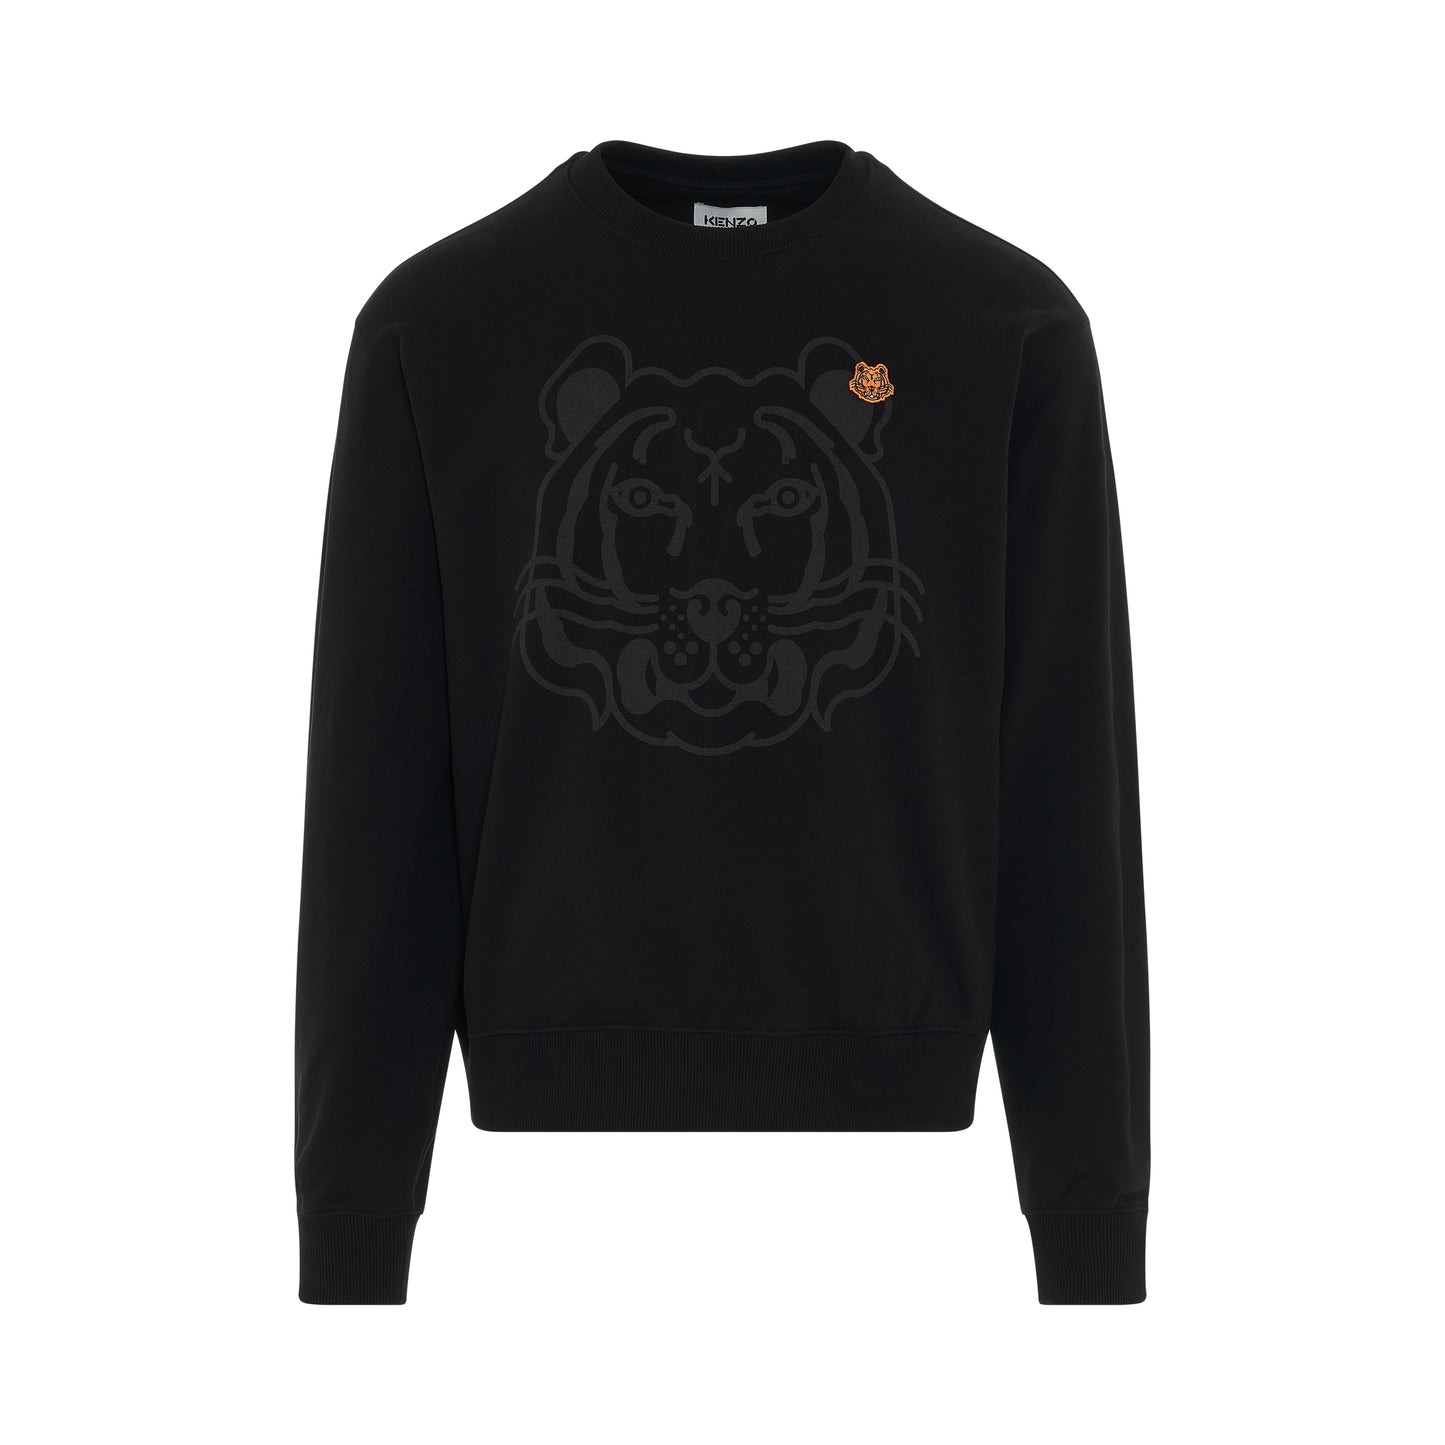 K-Tiger Abstract Sweatshirt in Black